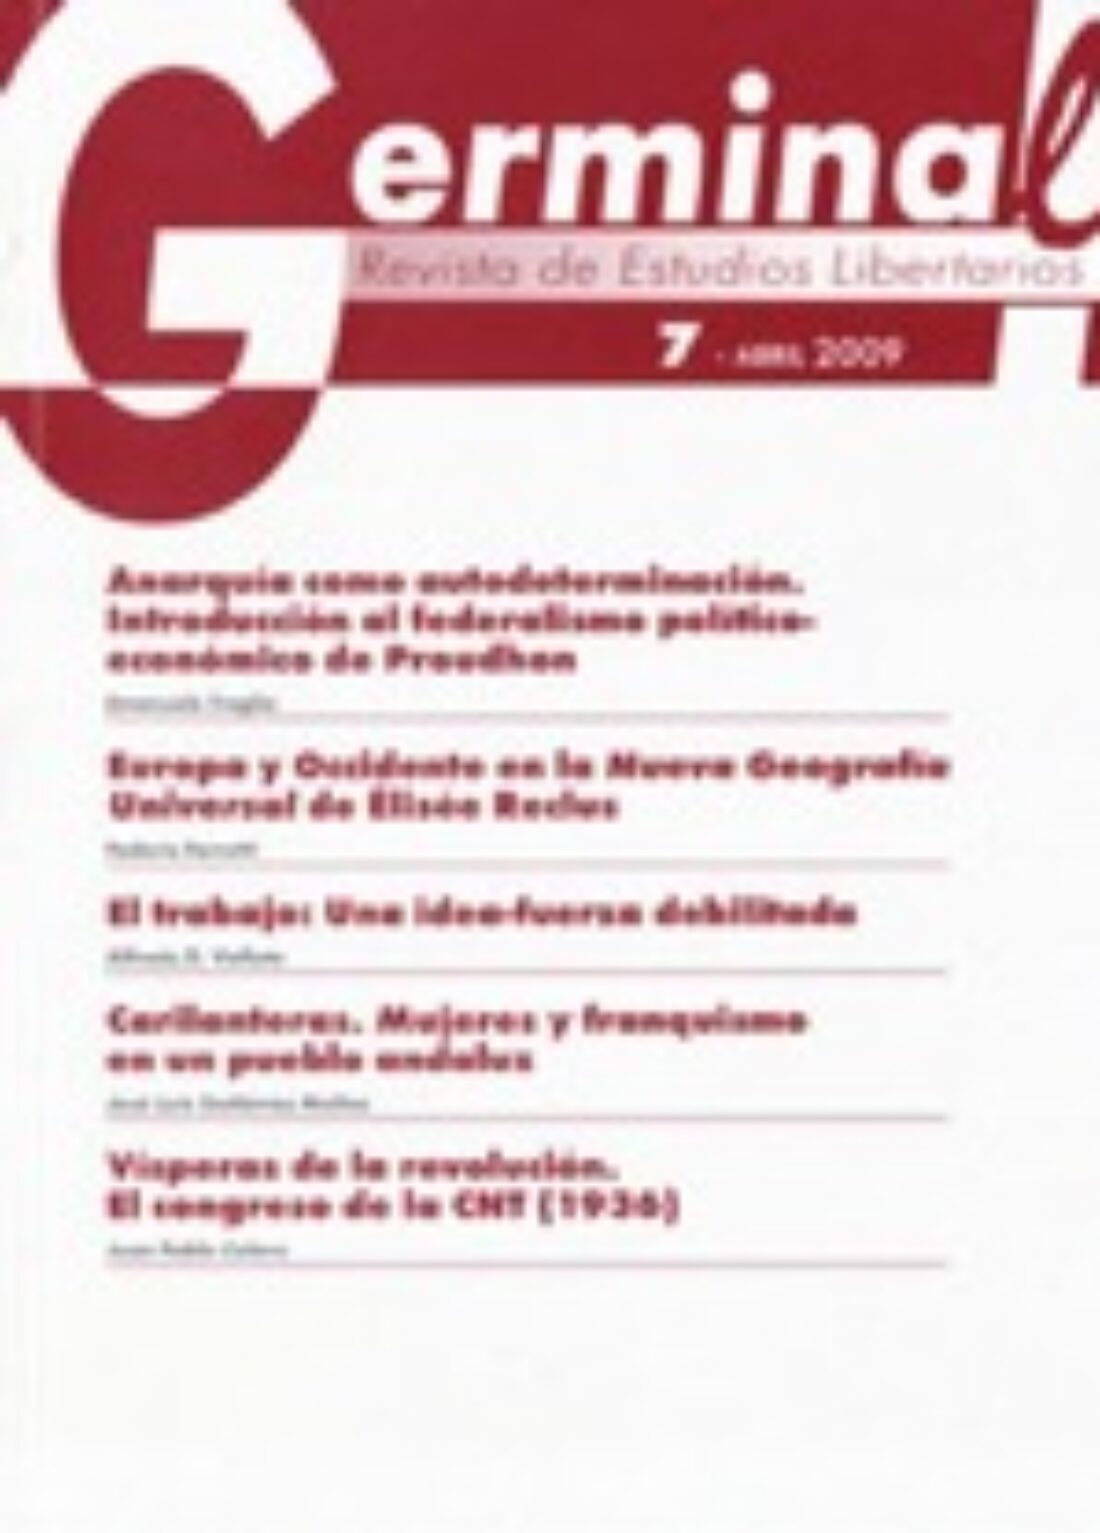 5 febrero, Madrid : Presentación «Germinal» nº7. Revista de estudios libertarios